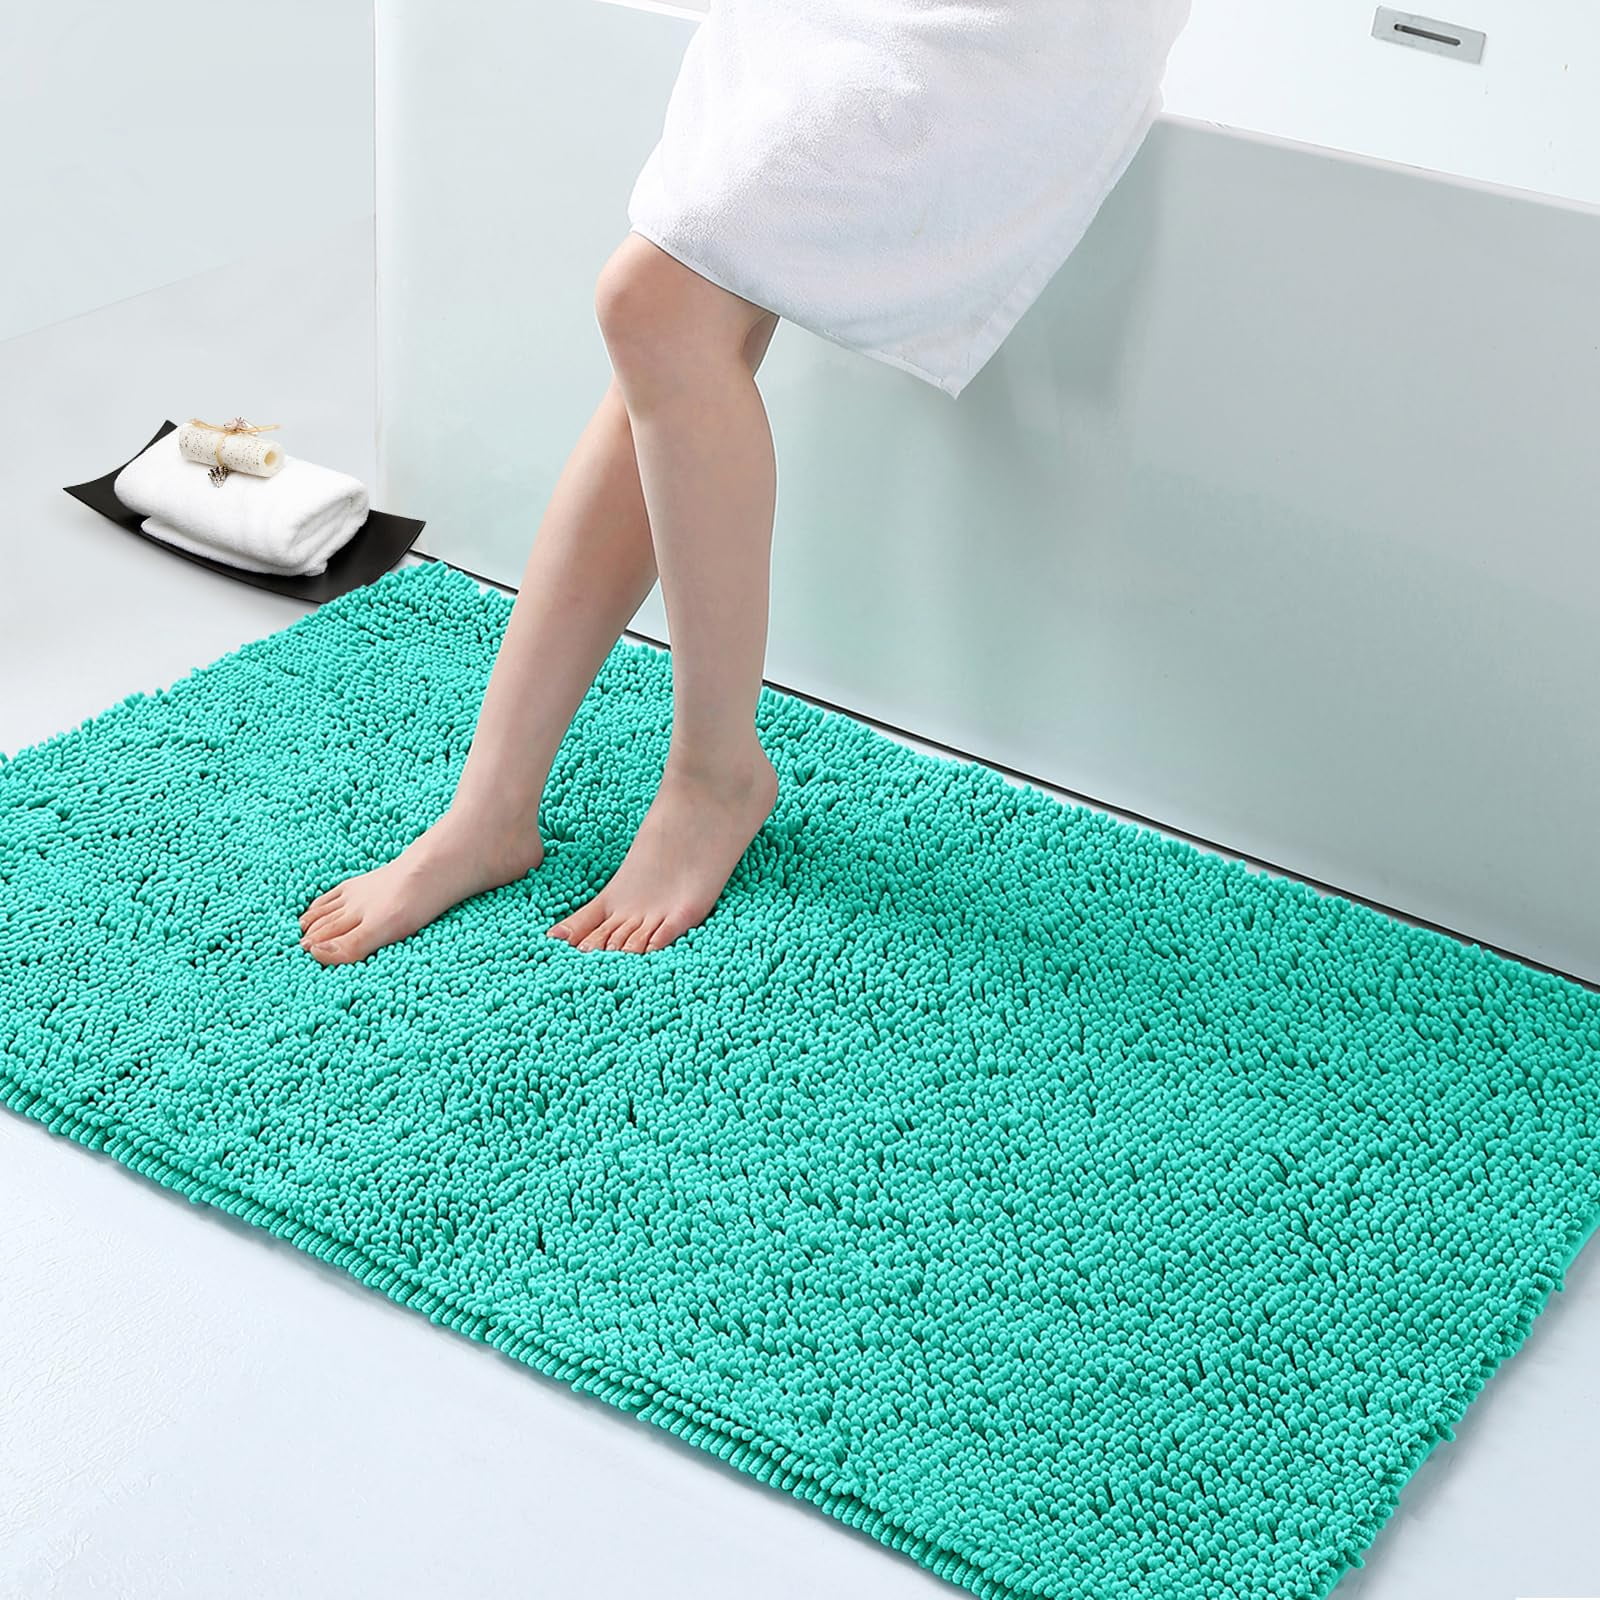 Shilucheng Chenille Bathroom Rug, Extra Thick and Absorbent Bath Mats,  Non-Slip Soft Plush Shaggy Bath Carpet (Beige, 24 x 36)